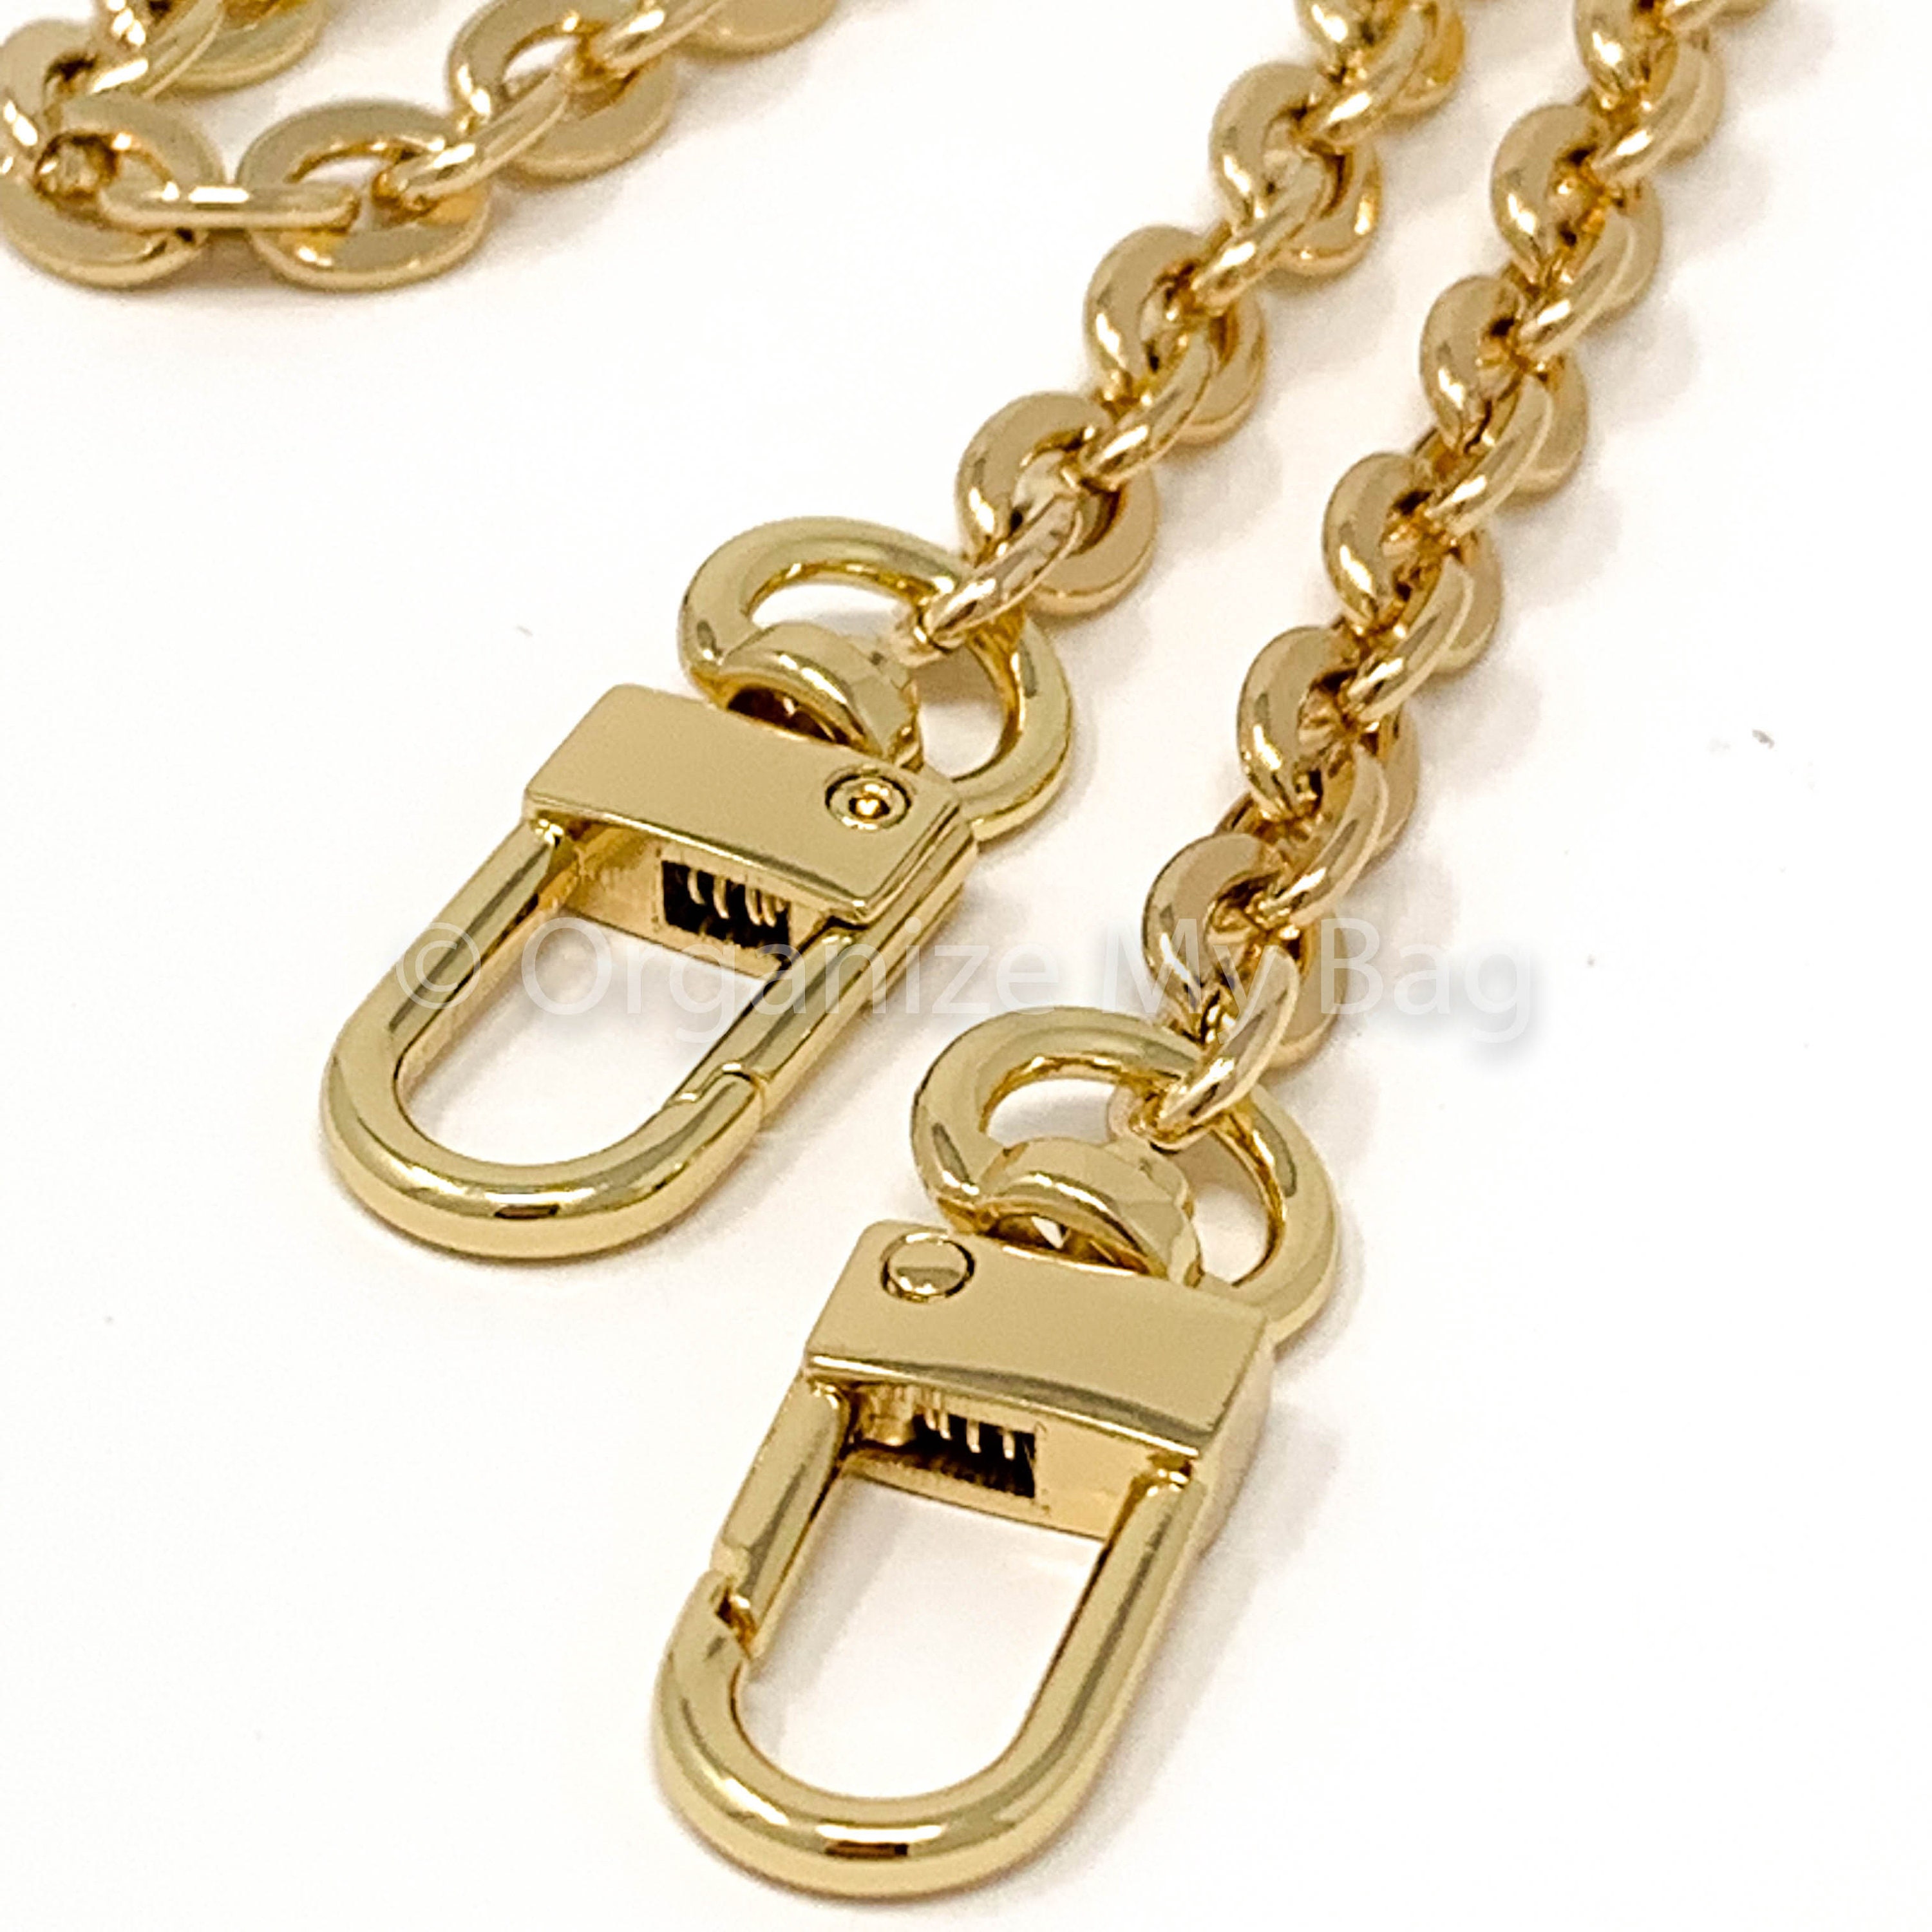 SHERCHPRY All Match Bag Chain Belt Purse Chains for Handbags Chain for  Purse Bag Chains for Handbags Shoulder Chain Strap Wallet Chain Gold Purse